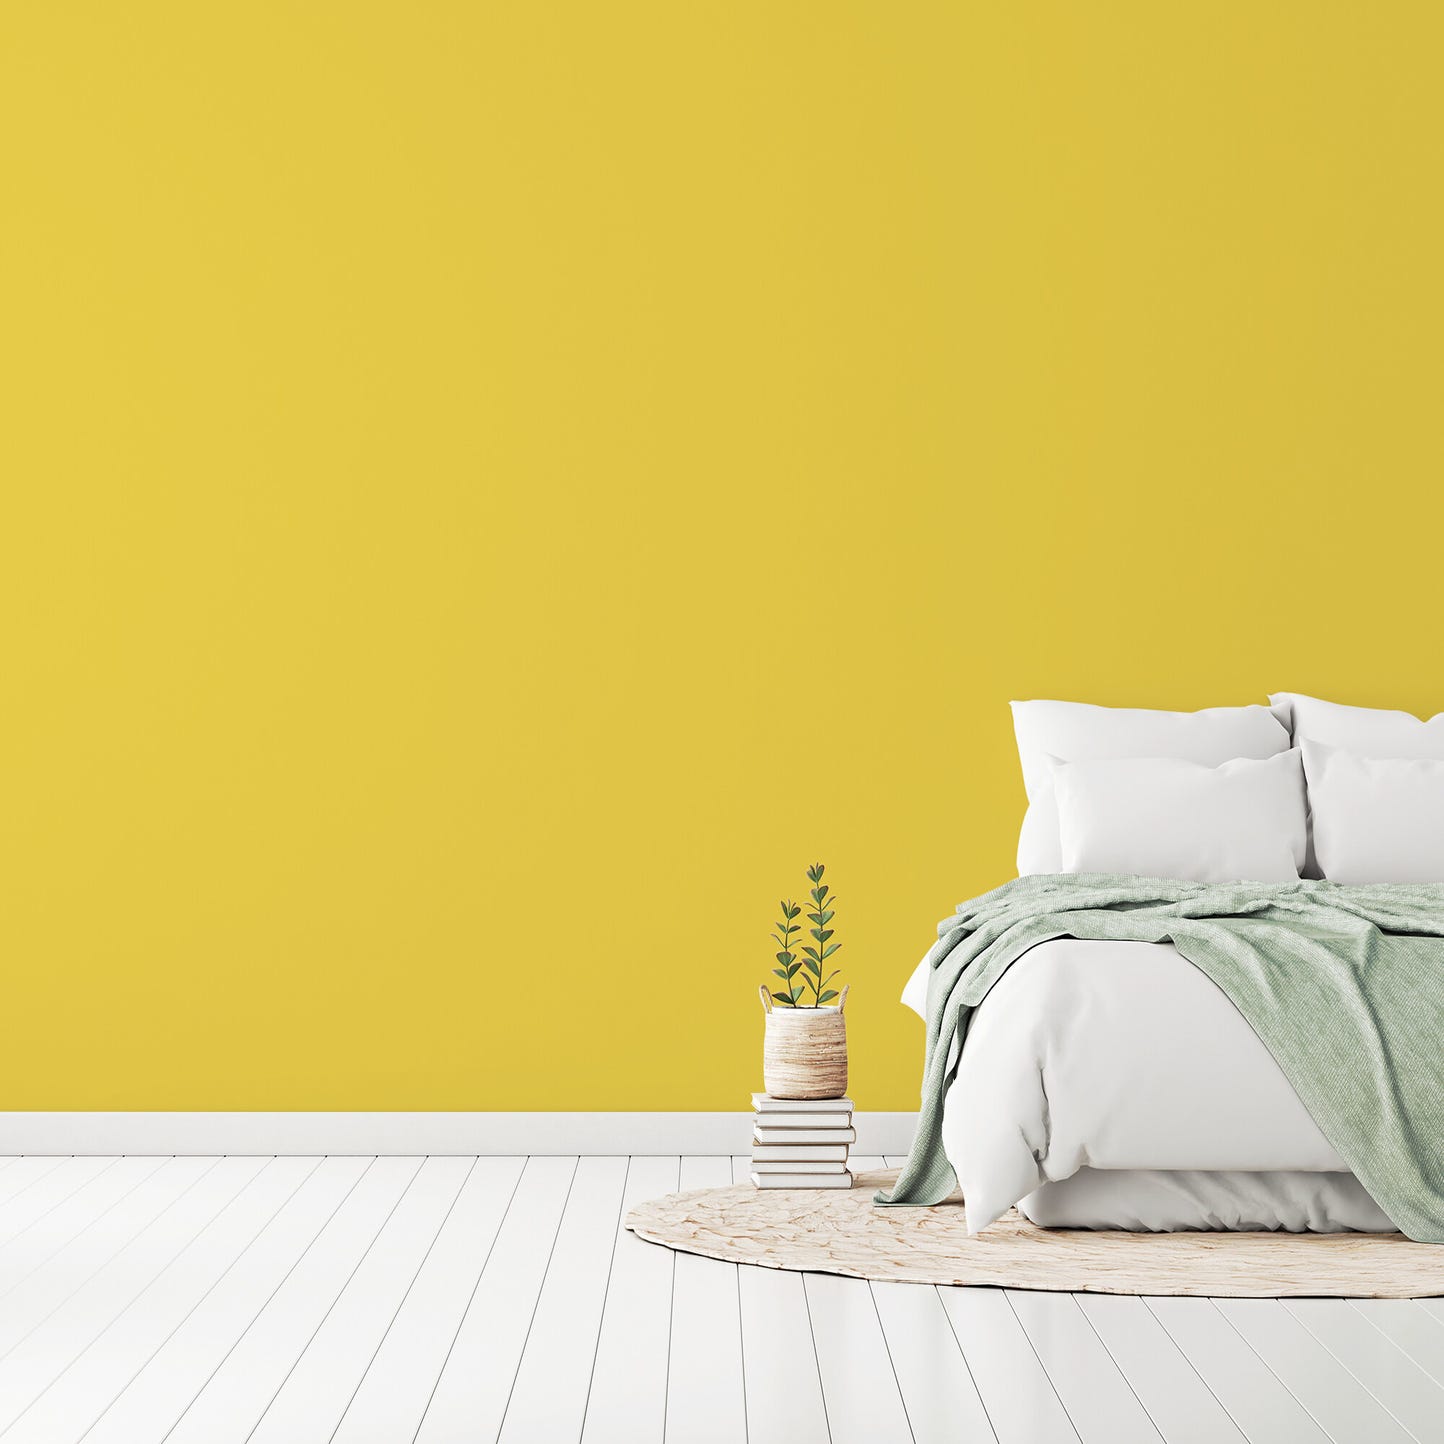 Peinture intérieure mat jaune braz teintée en machine 4L HPO - MOSAIK 4